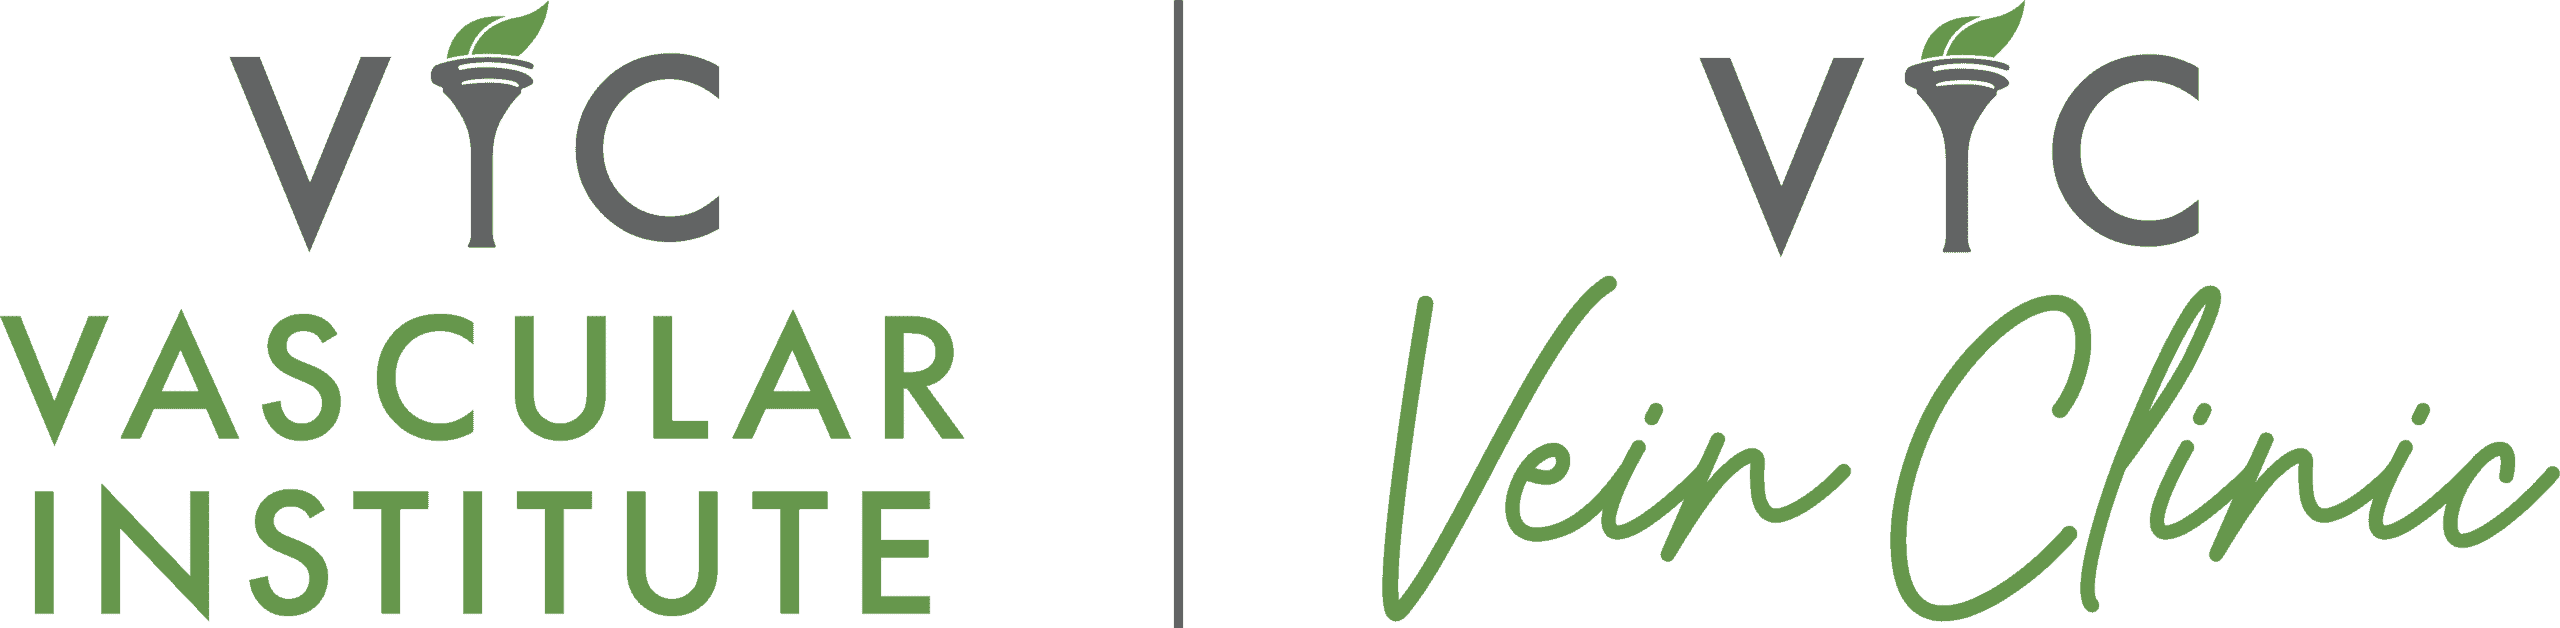 VIC Vascular Institute & VIC Vein Clinic Logos